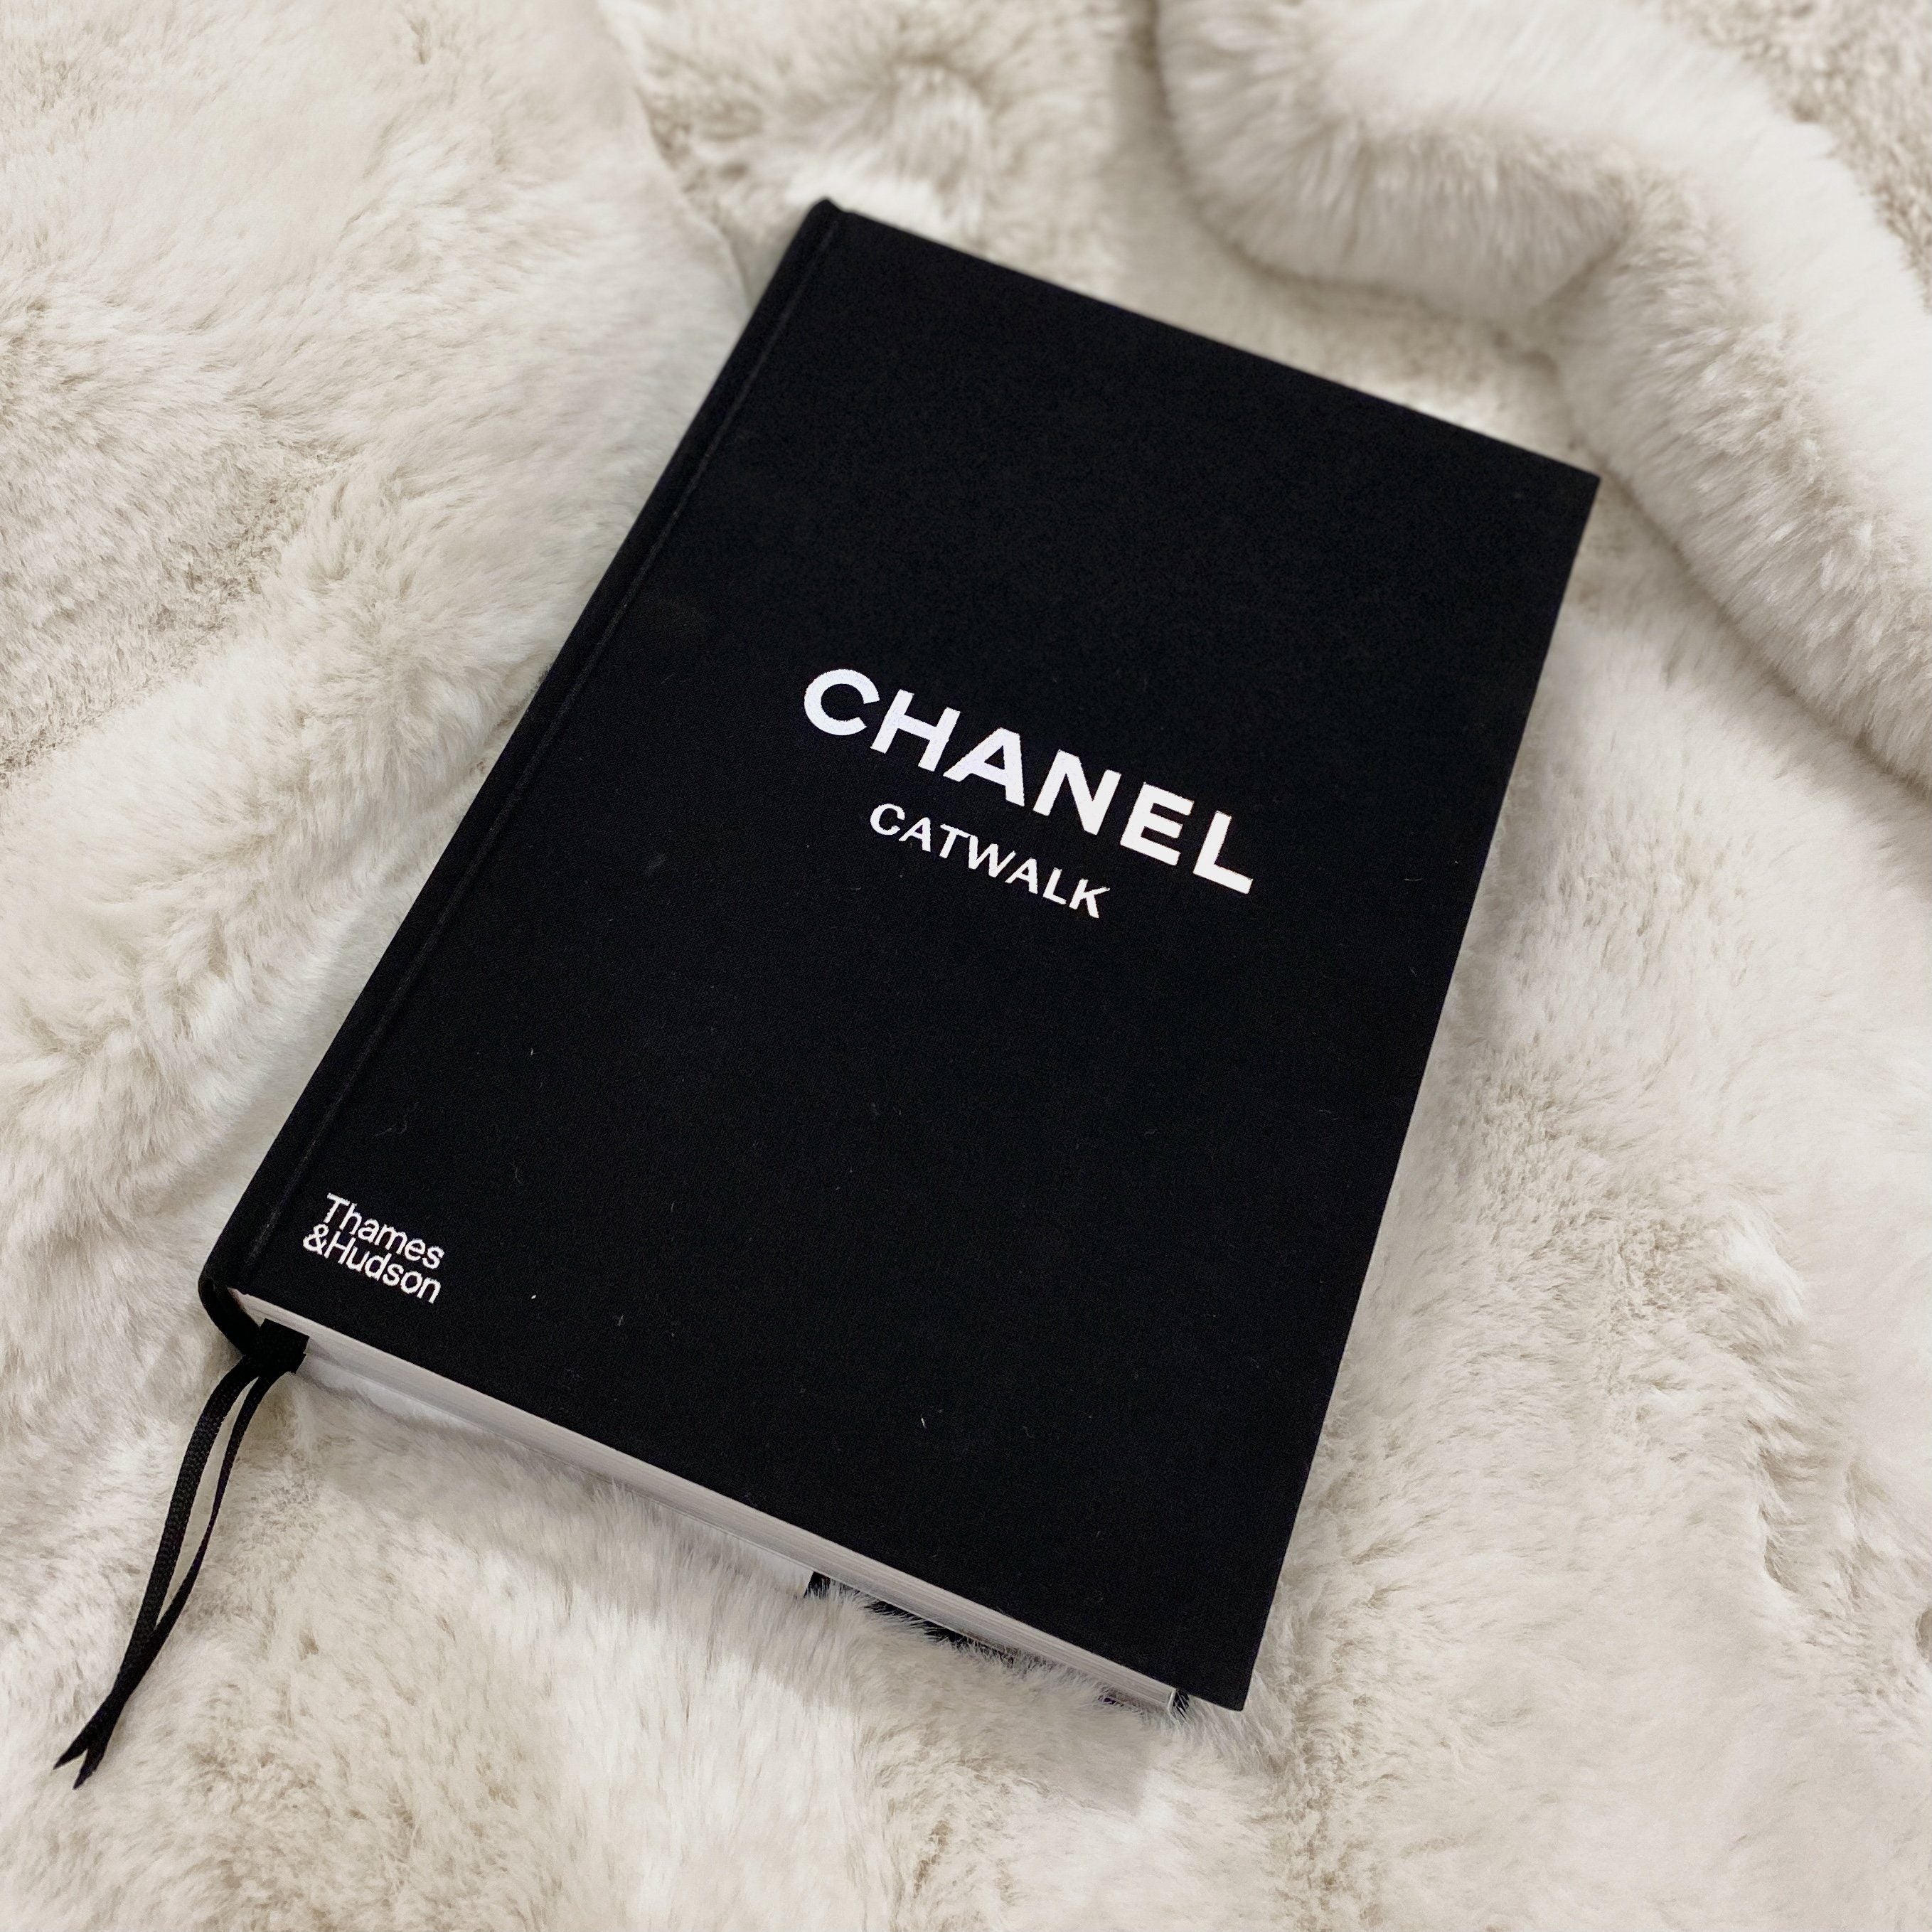 Chanel Catwalk | Coffee Books | Homes